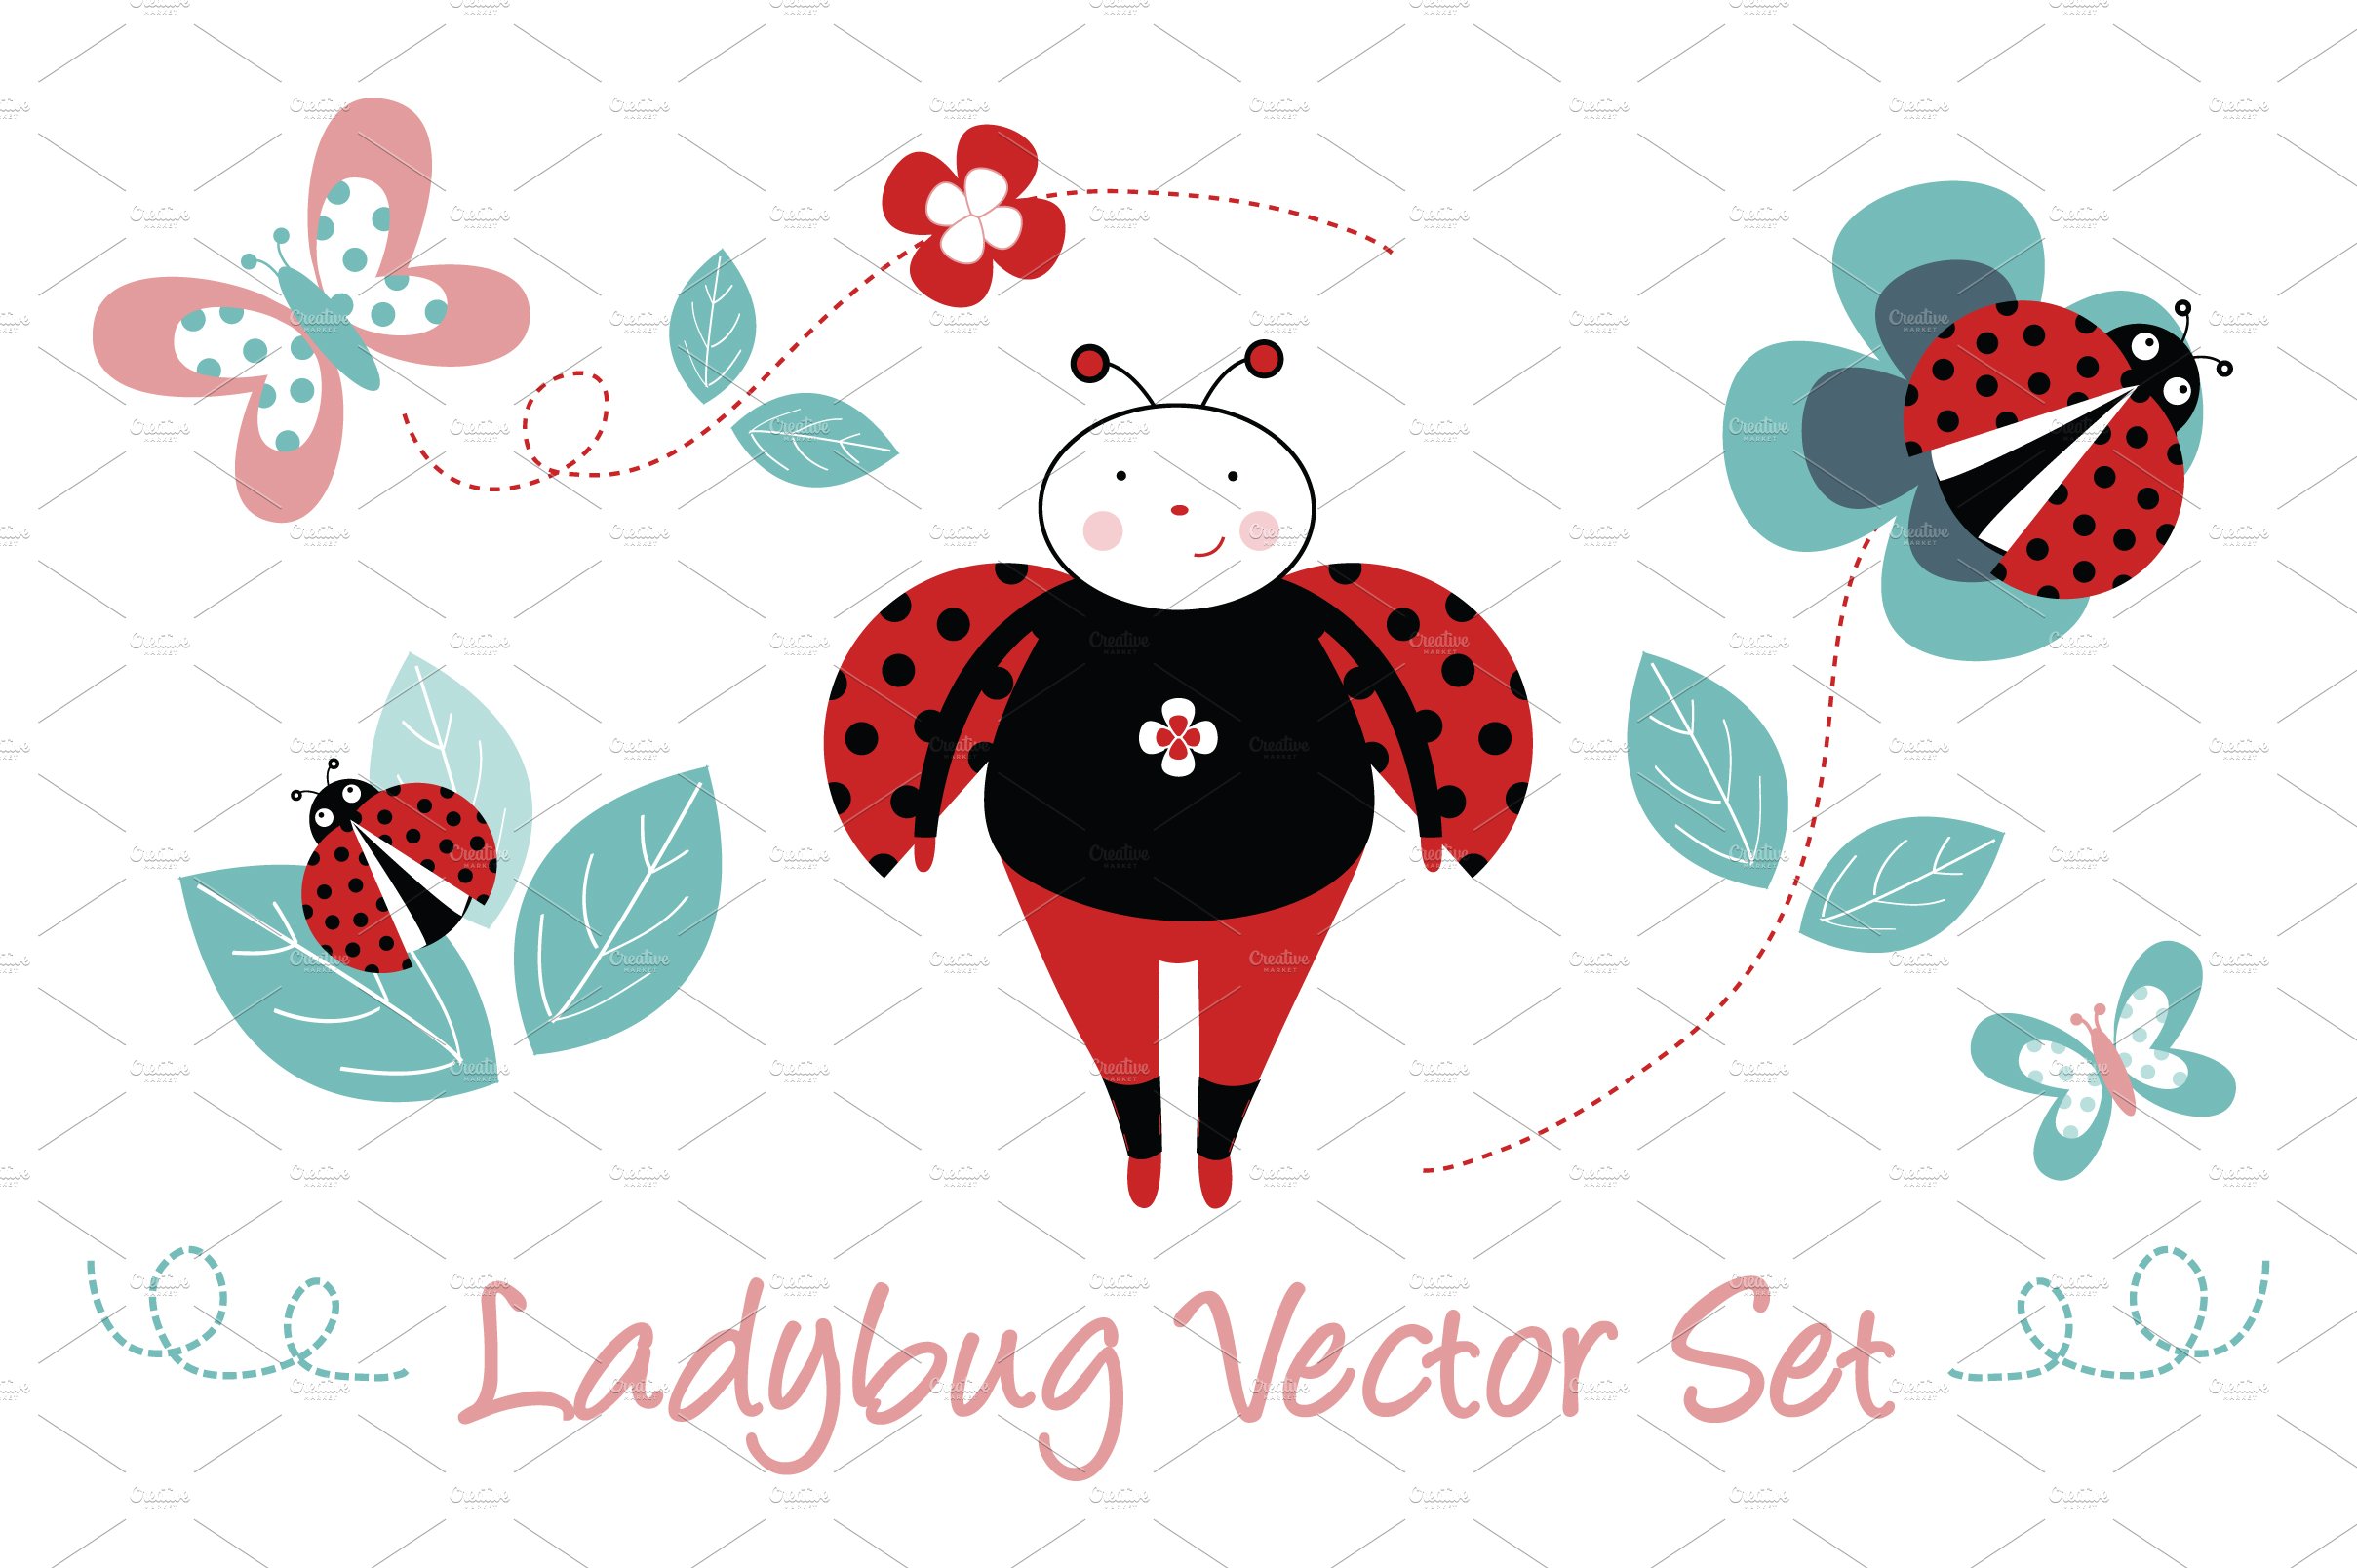 Ladybug Vector Set cover image.